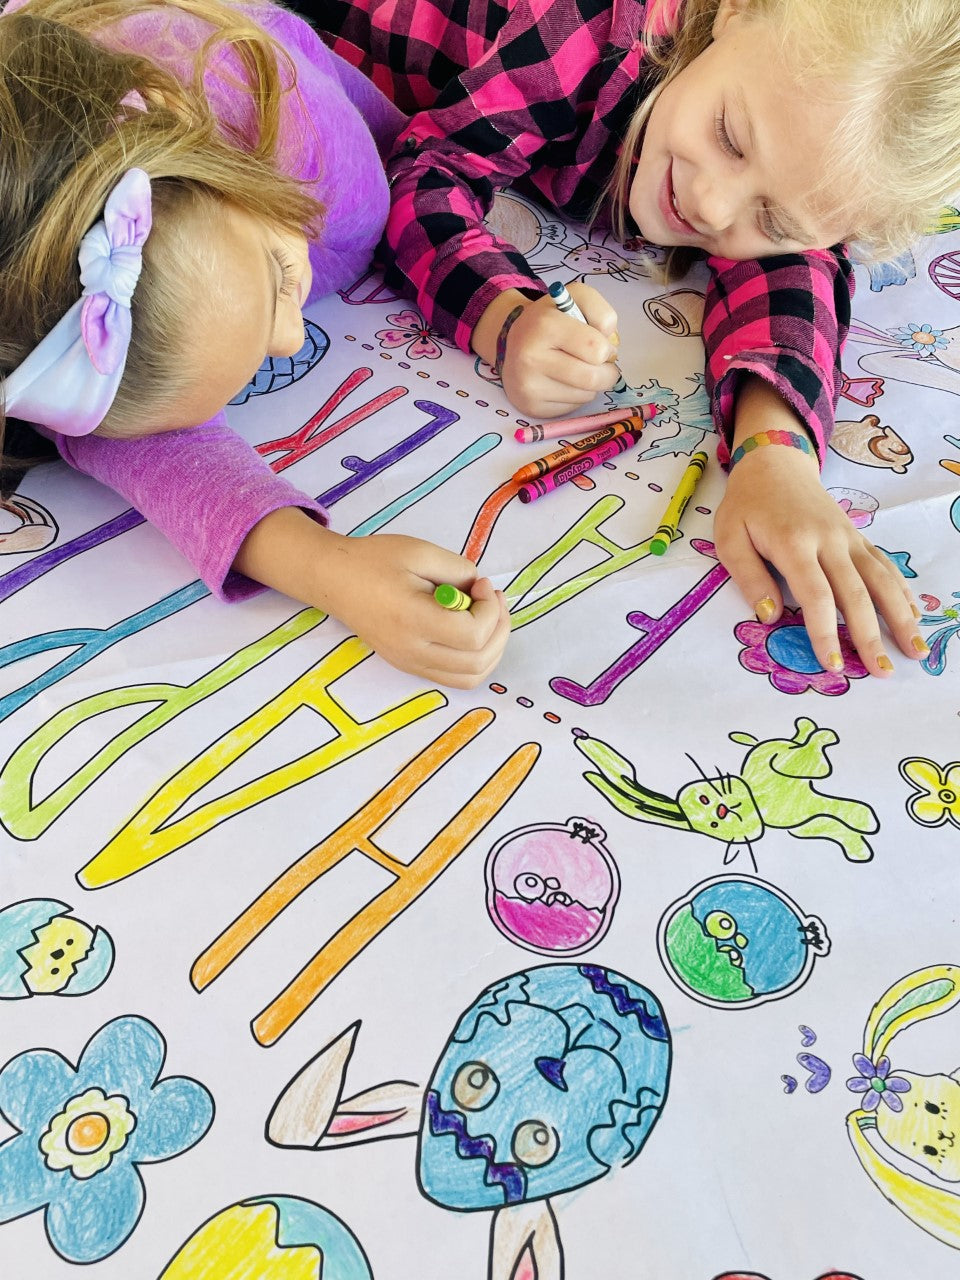 Easy Kids' Activity Idea — Tablecloth Coloring! - Tatertots and Jello